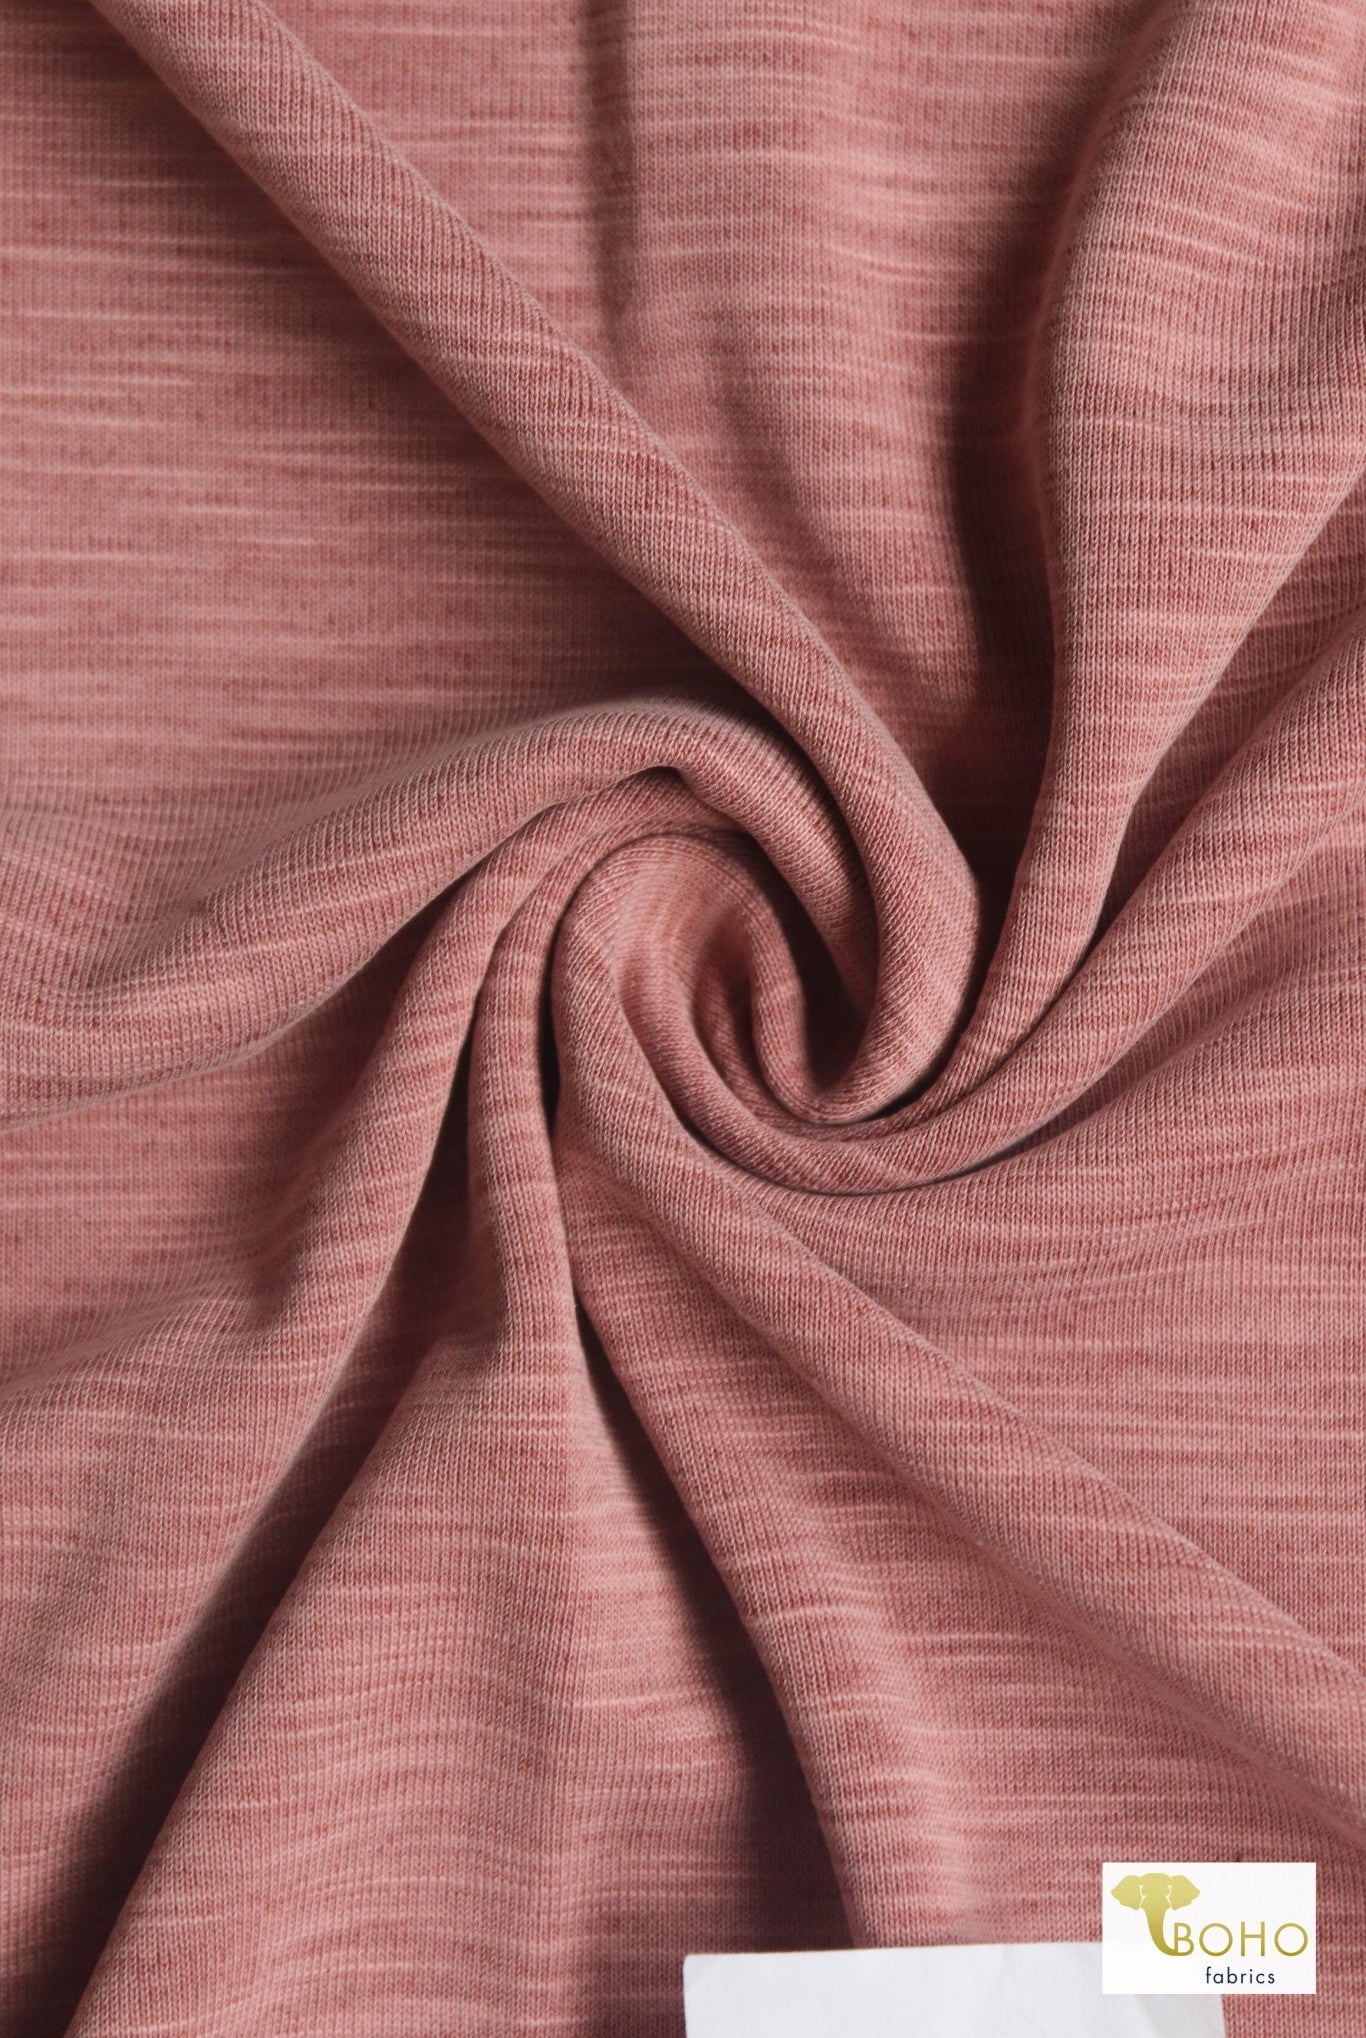 Slub, Terracotta, Cupro Knit Fabric - Boho Fabrics - Cupro, Knit Fabric